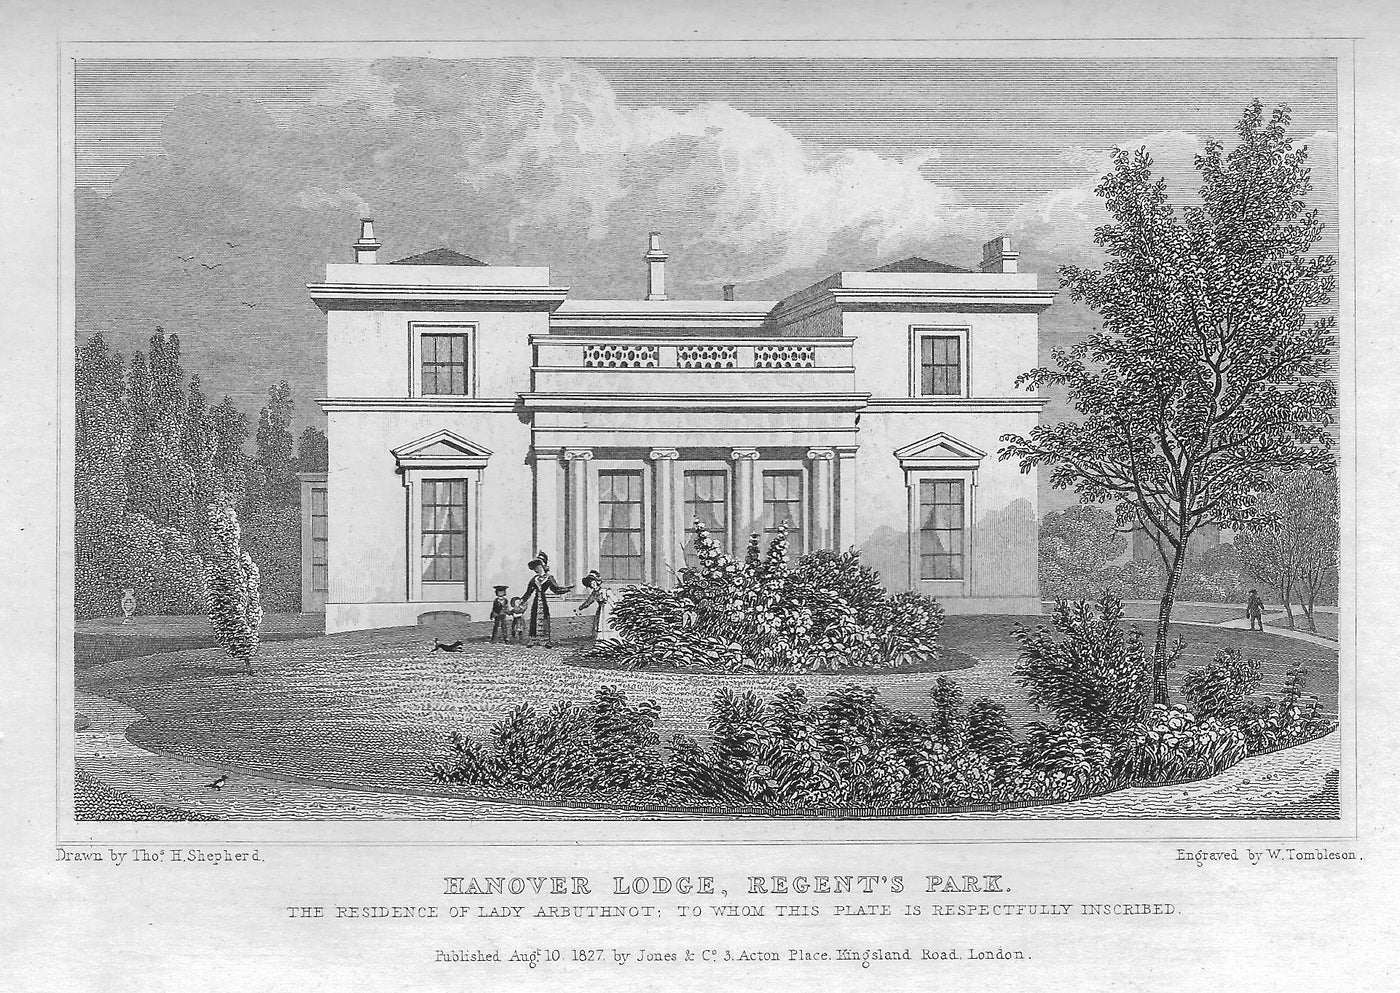 Hanover Lodge Regent's Park antique print 1830